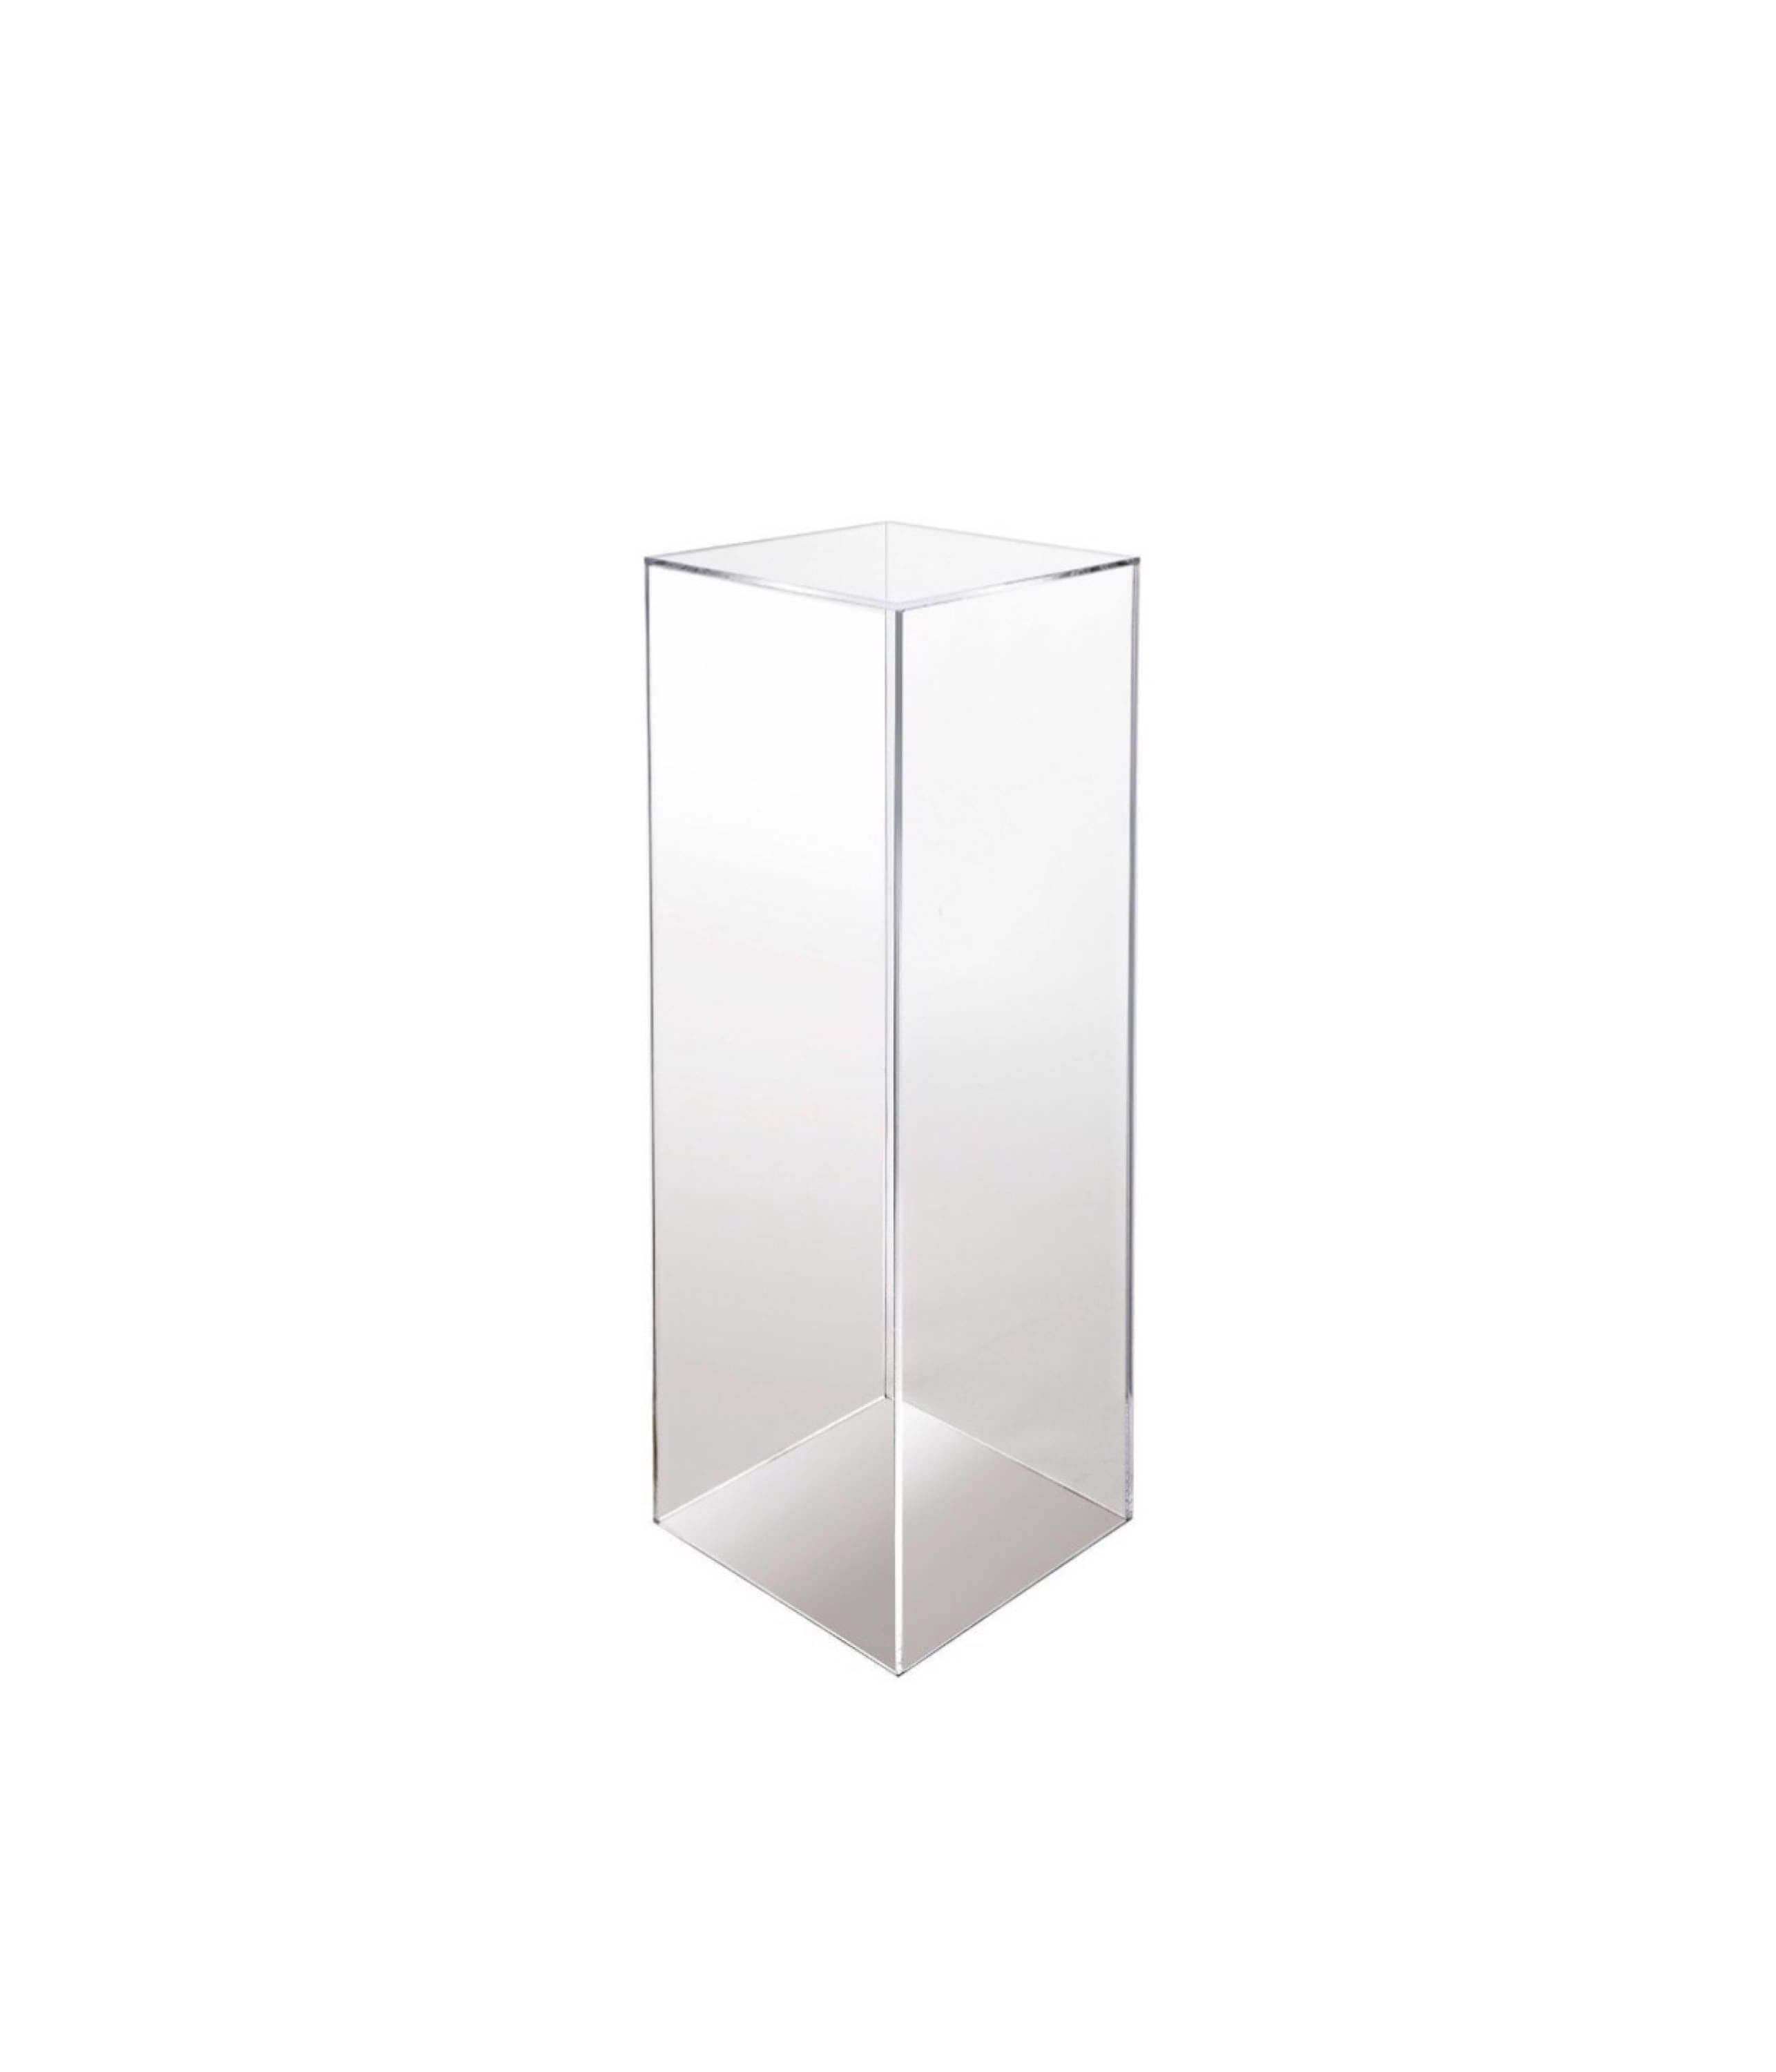 flexiglass stand